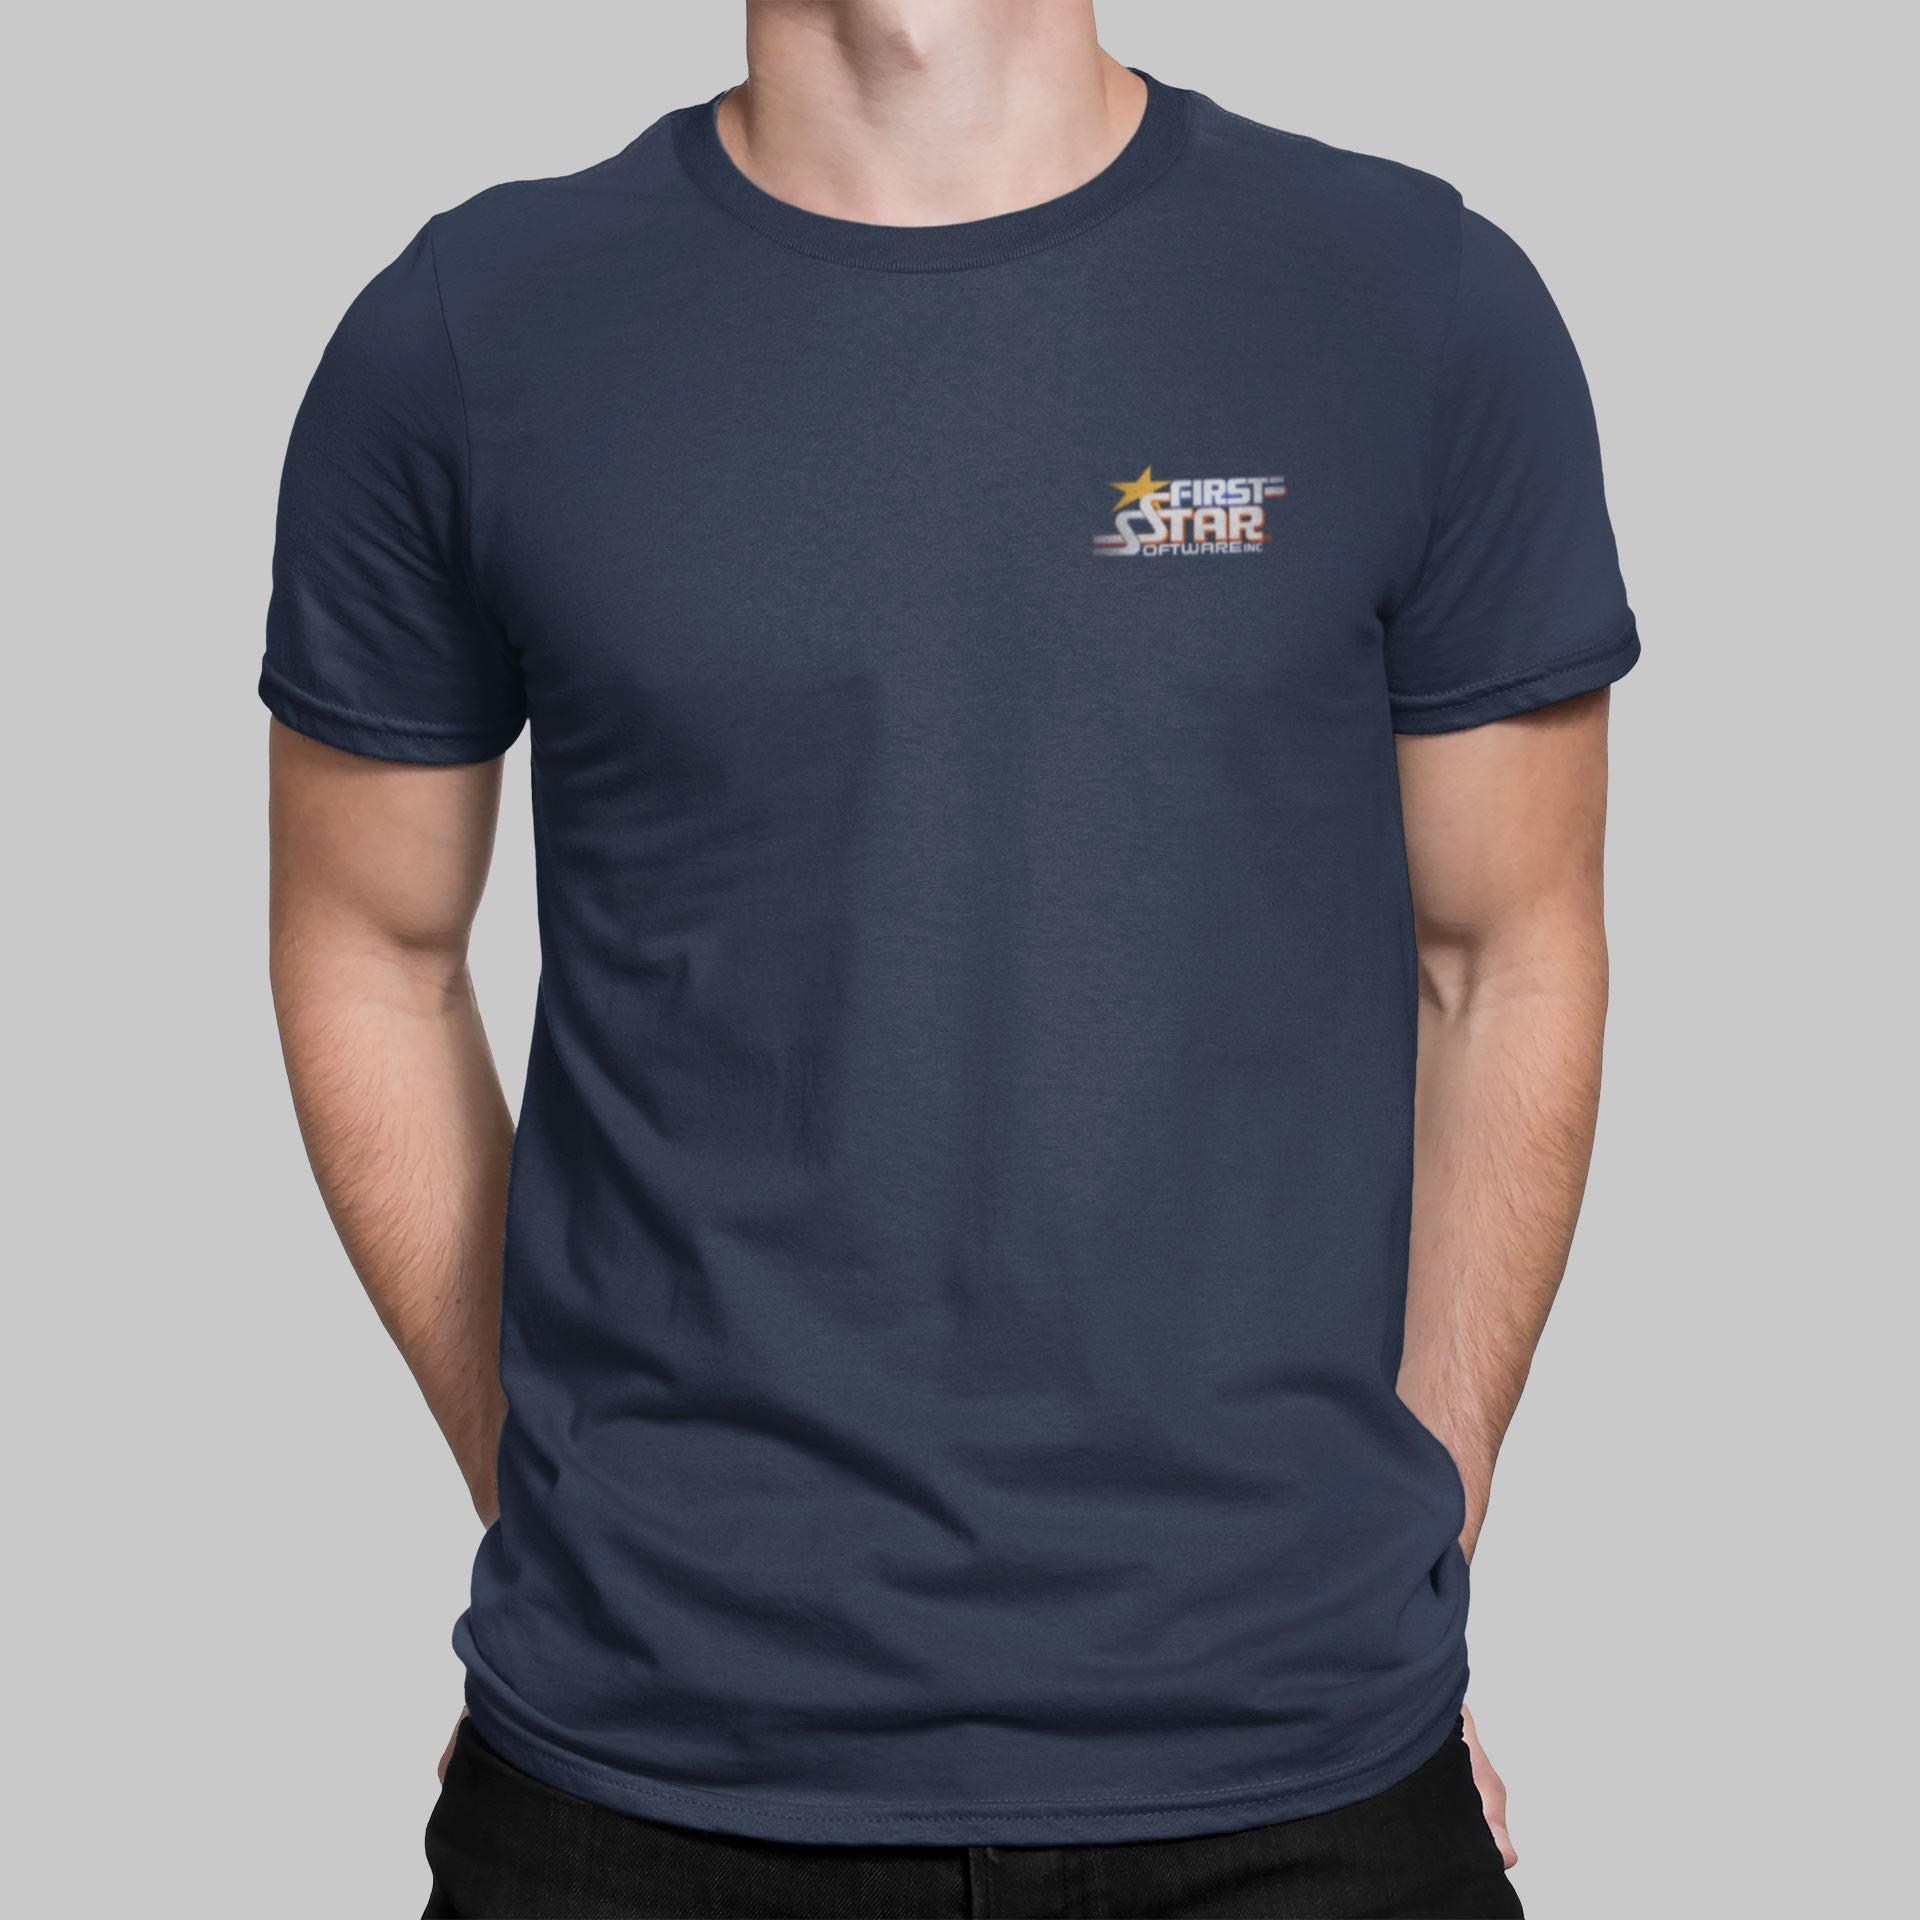 First Star Software Pocket Print Retro Gaming T-Shirt T-Shirt Seven Squared Small 34-36" Navy 